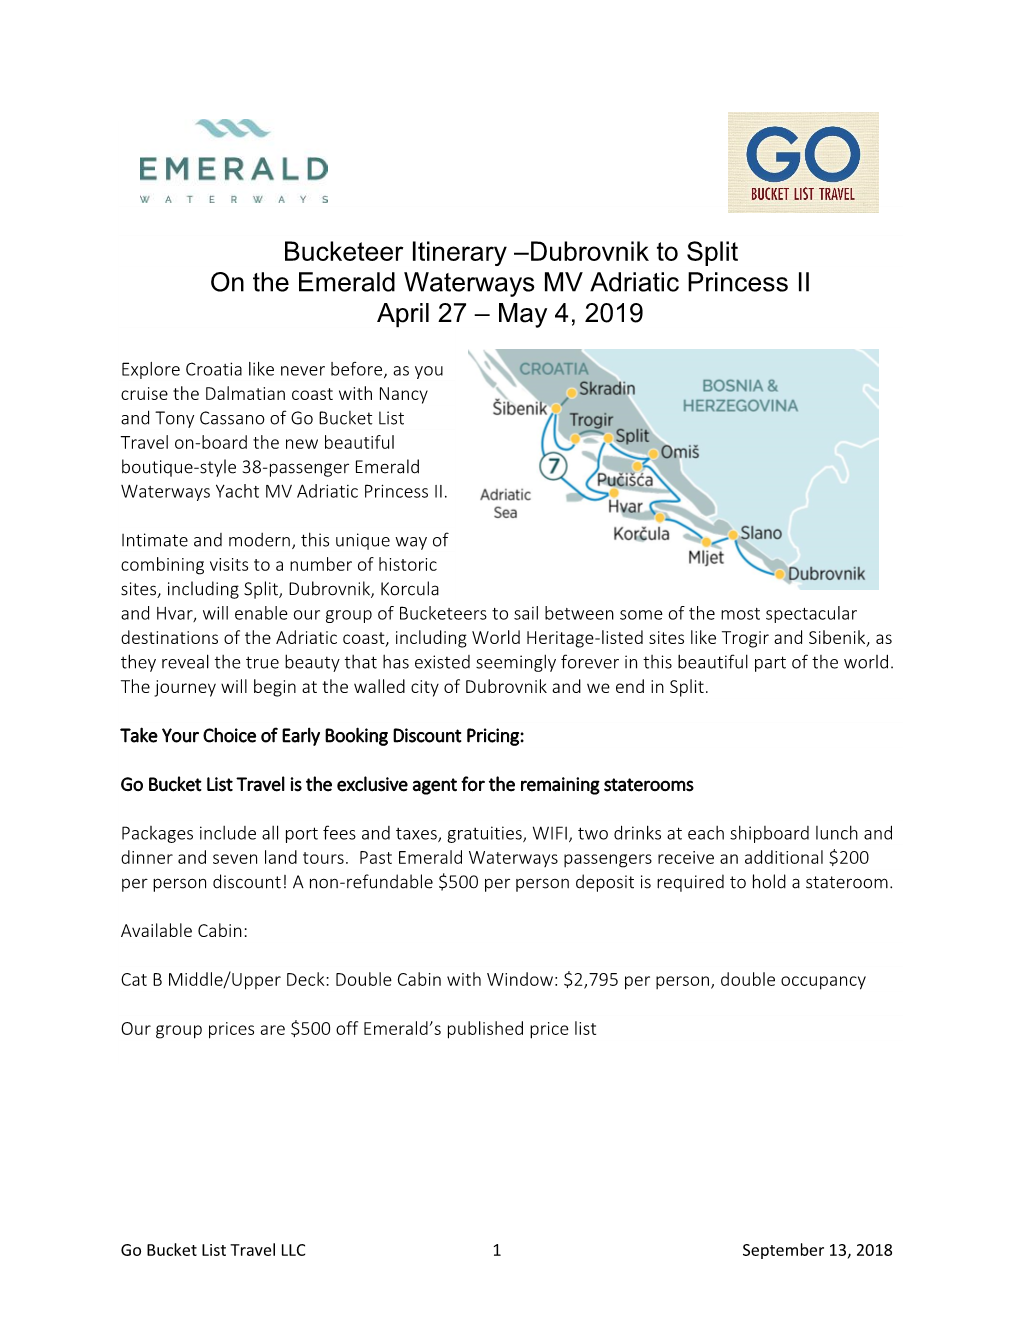 Bucketeer Itinerary –Dubrovnik to Split on the Emerald Waterways MV Adriatic Princess II April 27 – May 4, 2019